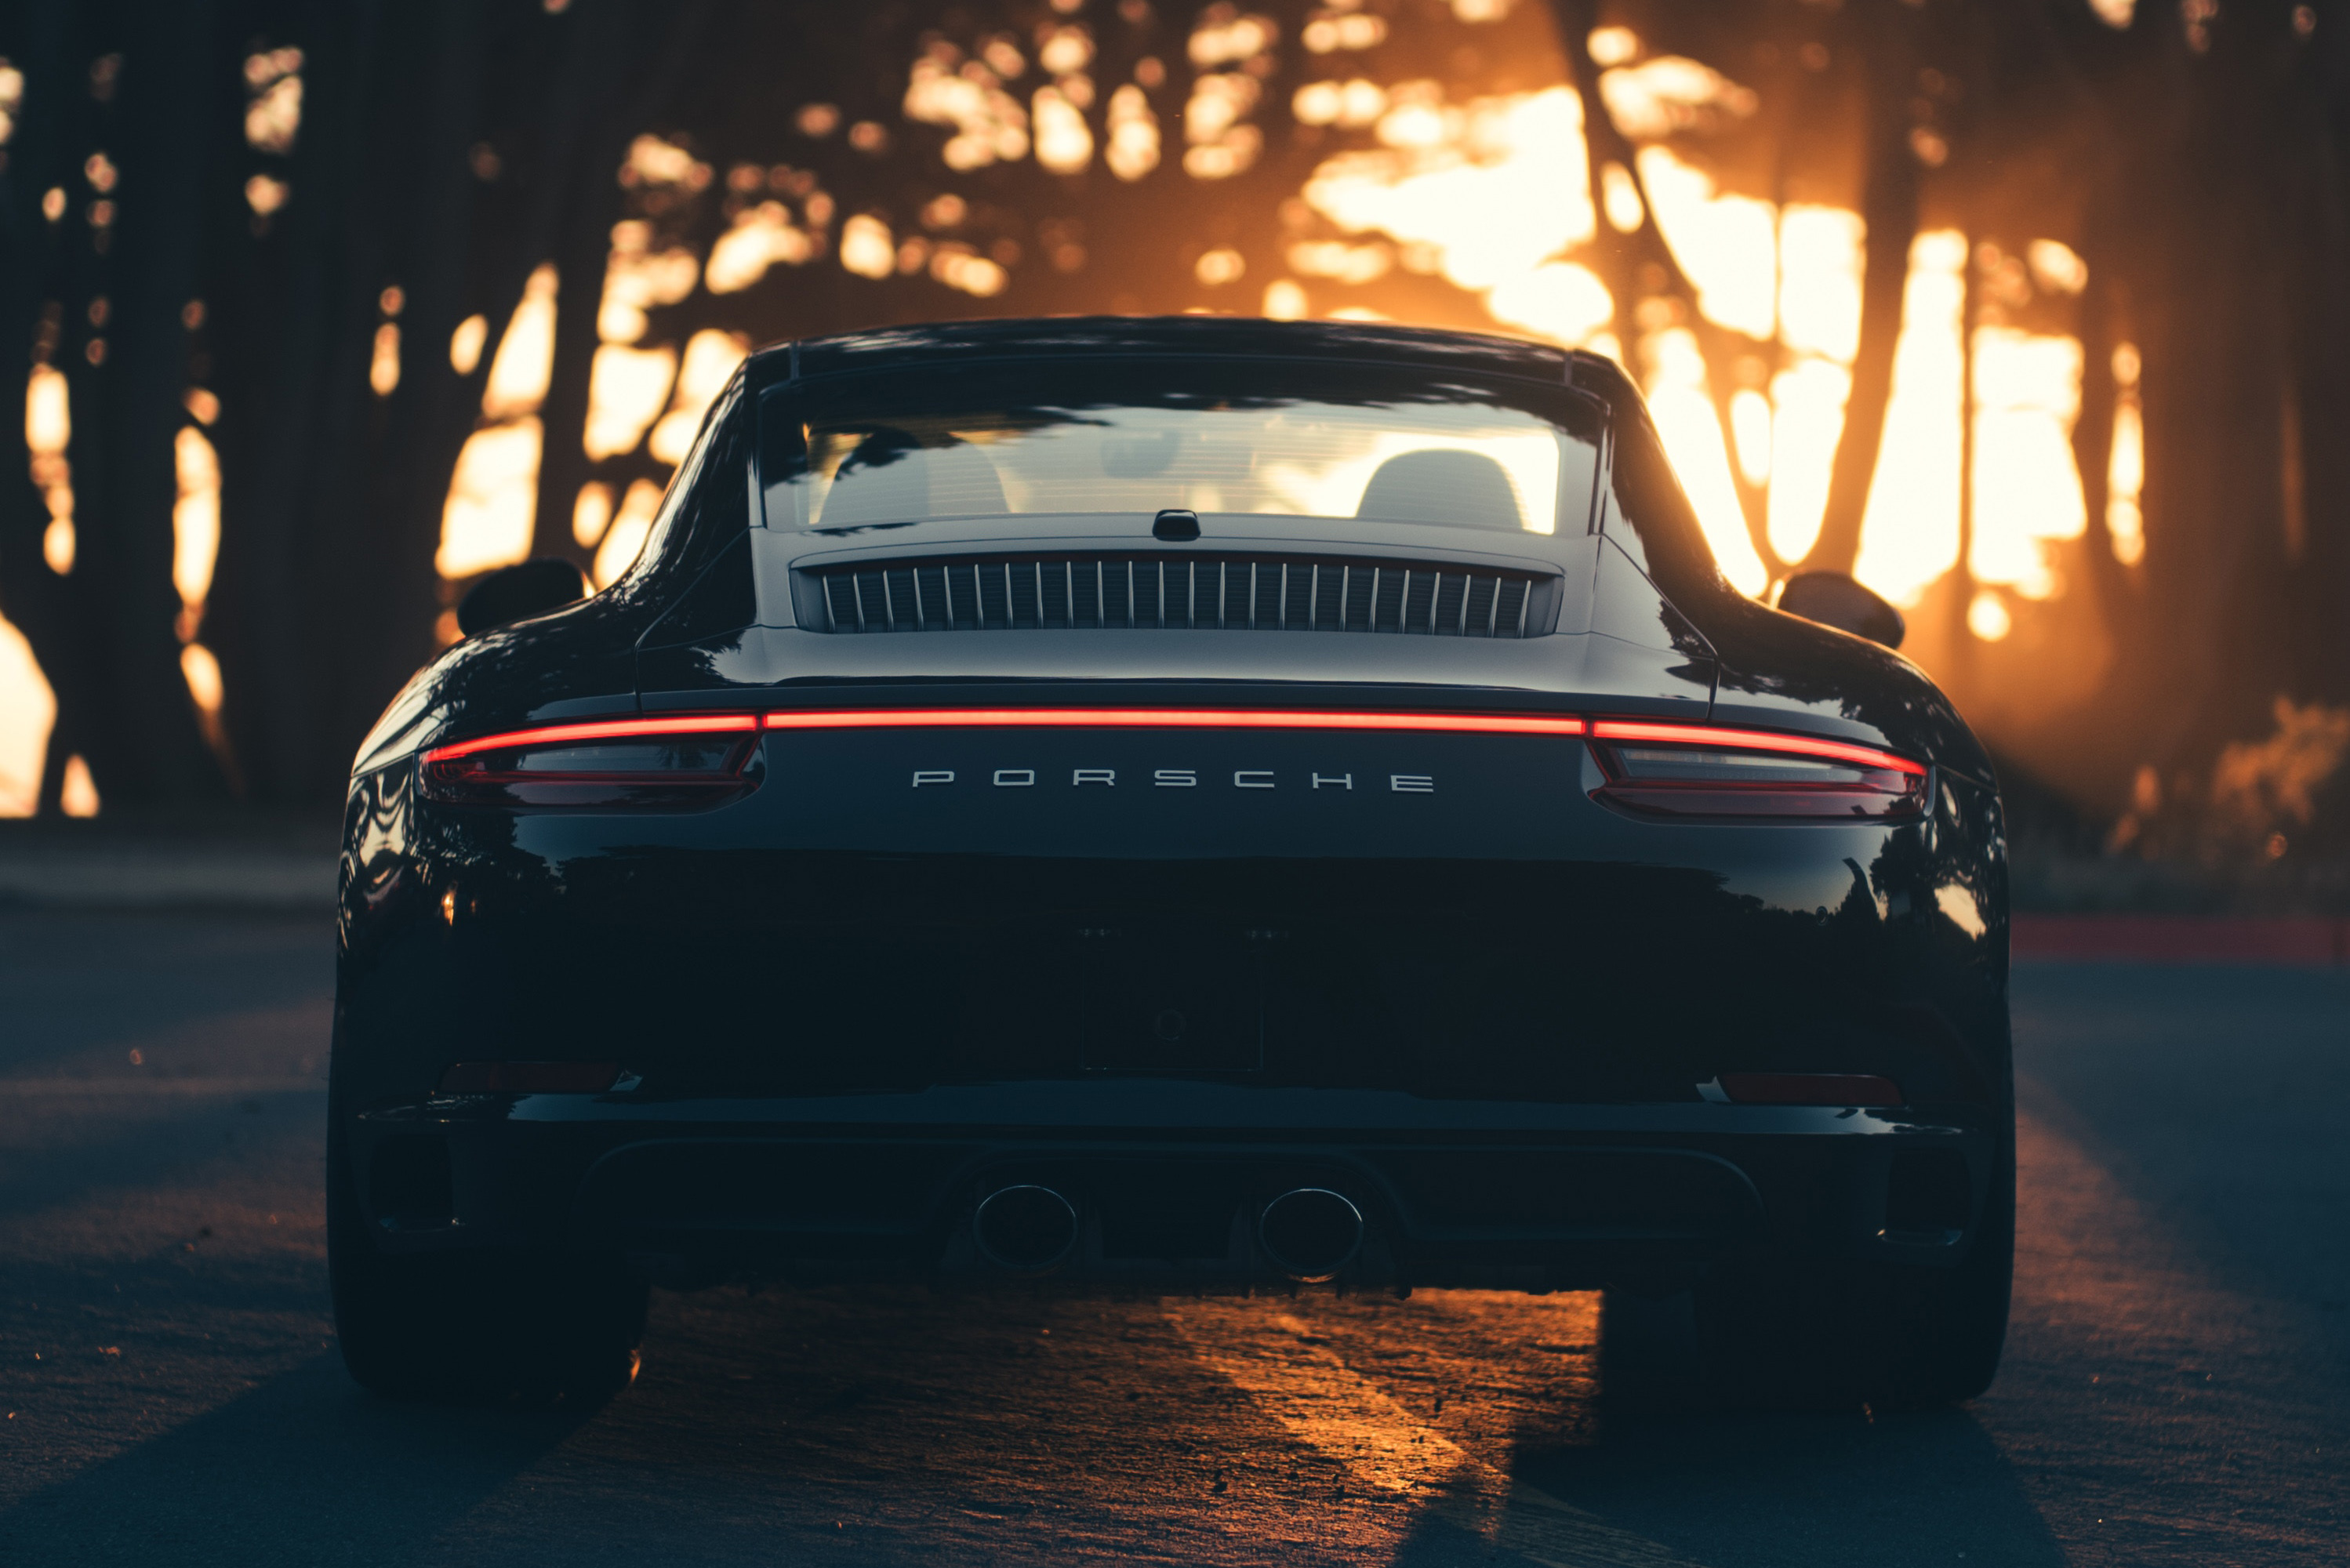 Porsche Carrera 911 Black, HD Cars, 4k Wallpapers, Images, Backgrounds